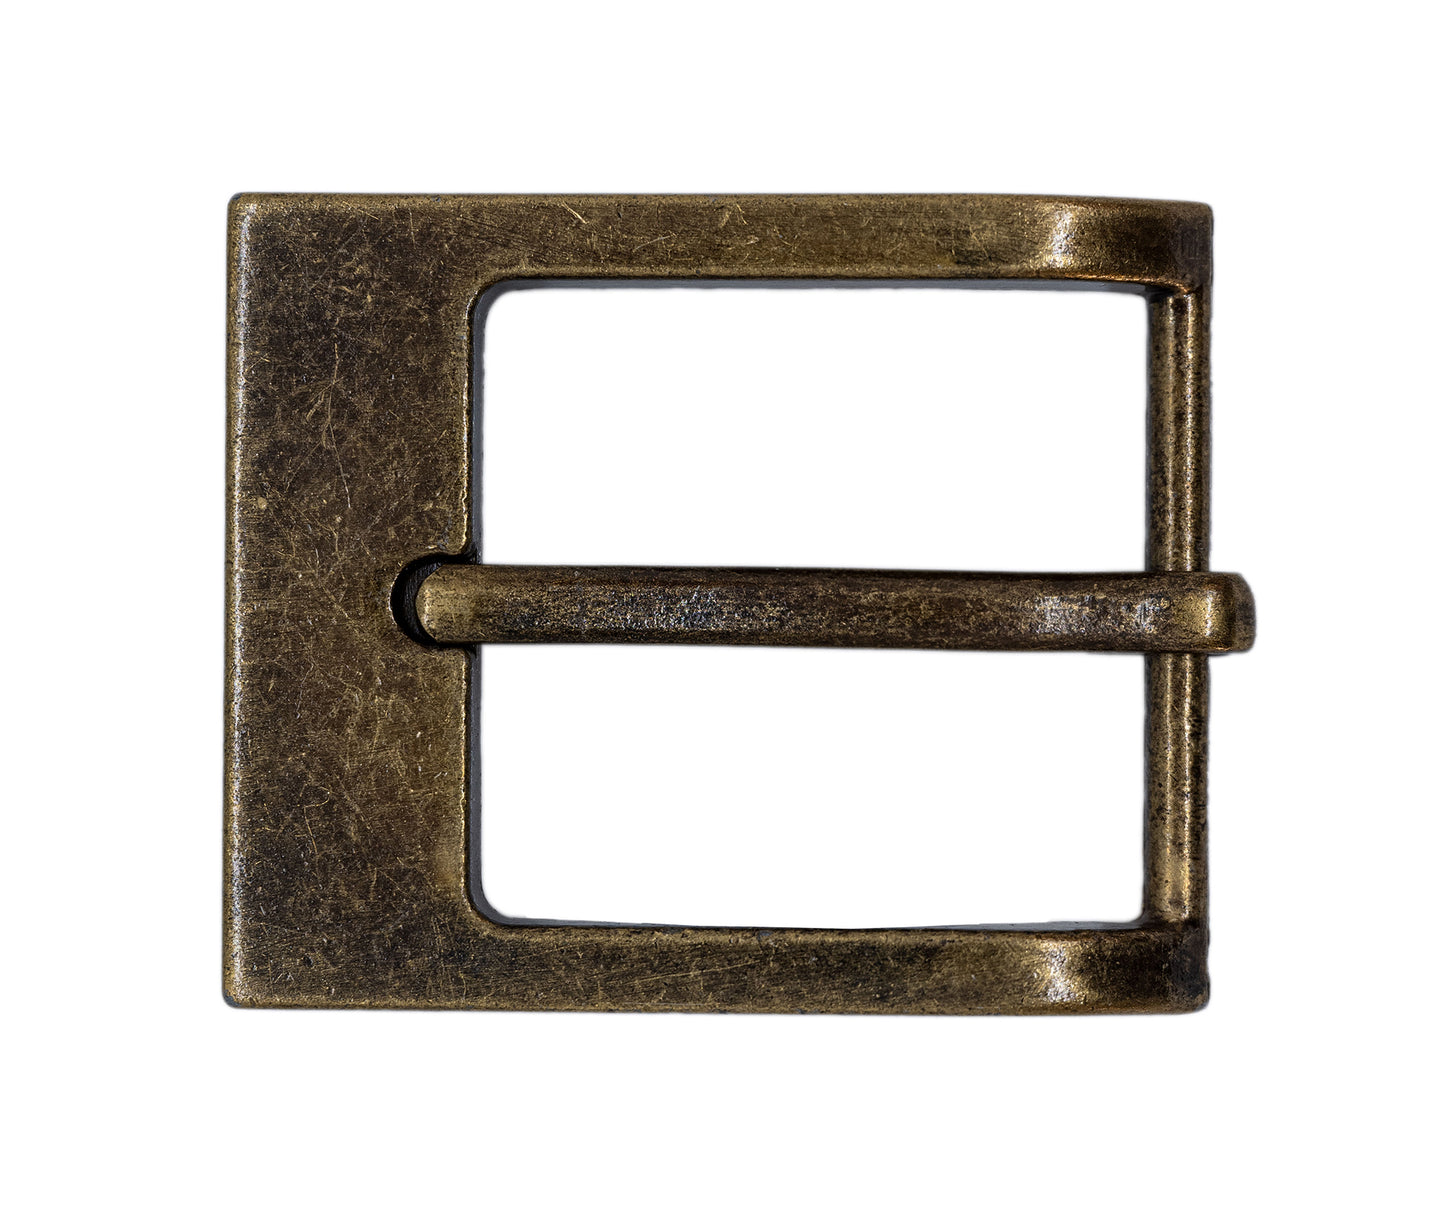 TBS-P5000 - Bronze Finish Rectangular Buckle for 1 1/2" Belts